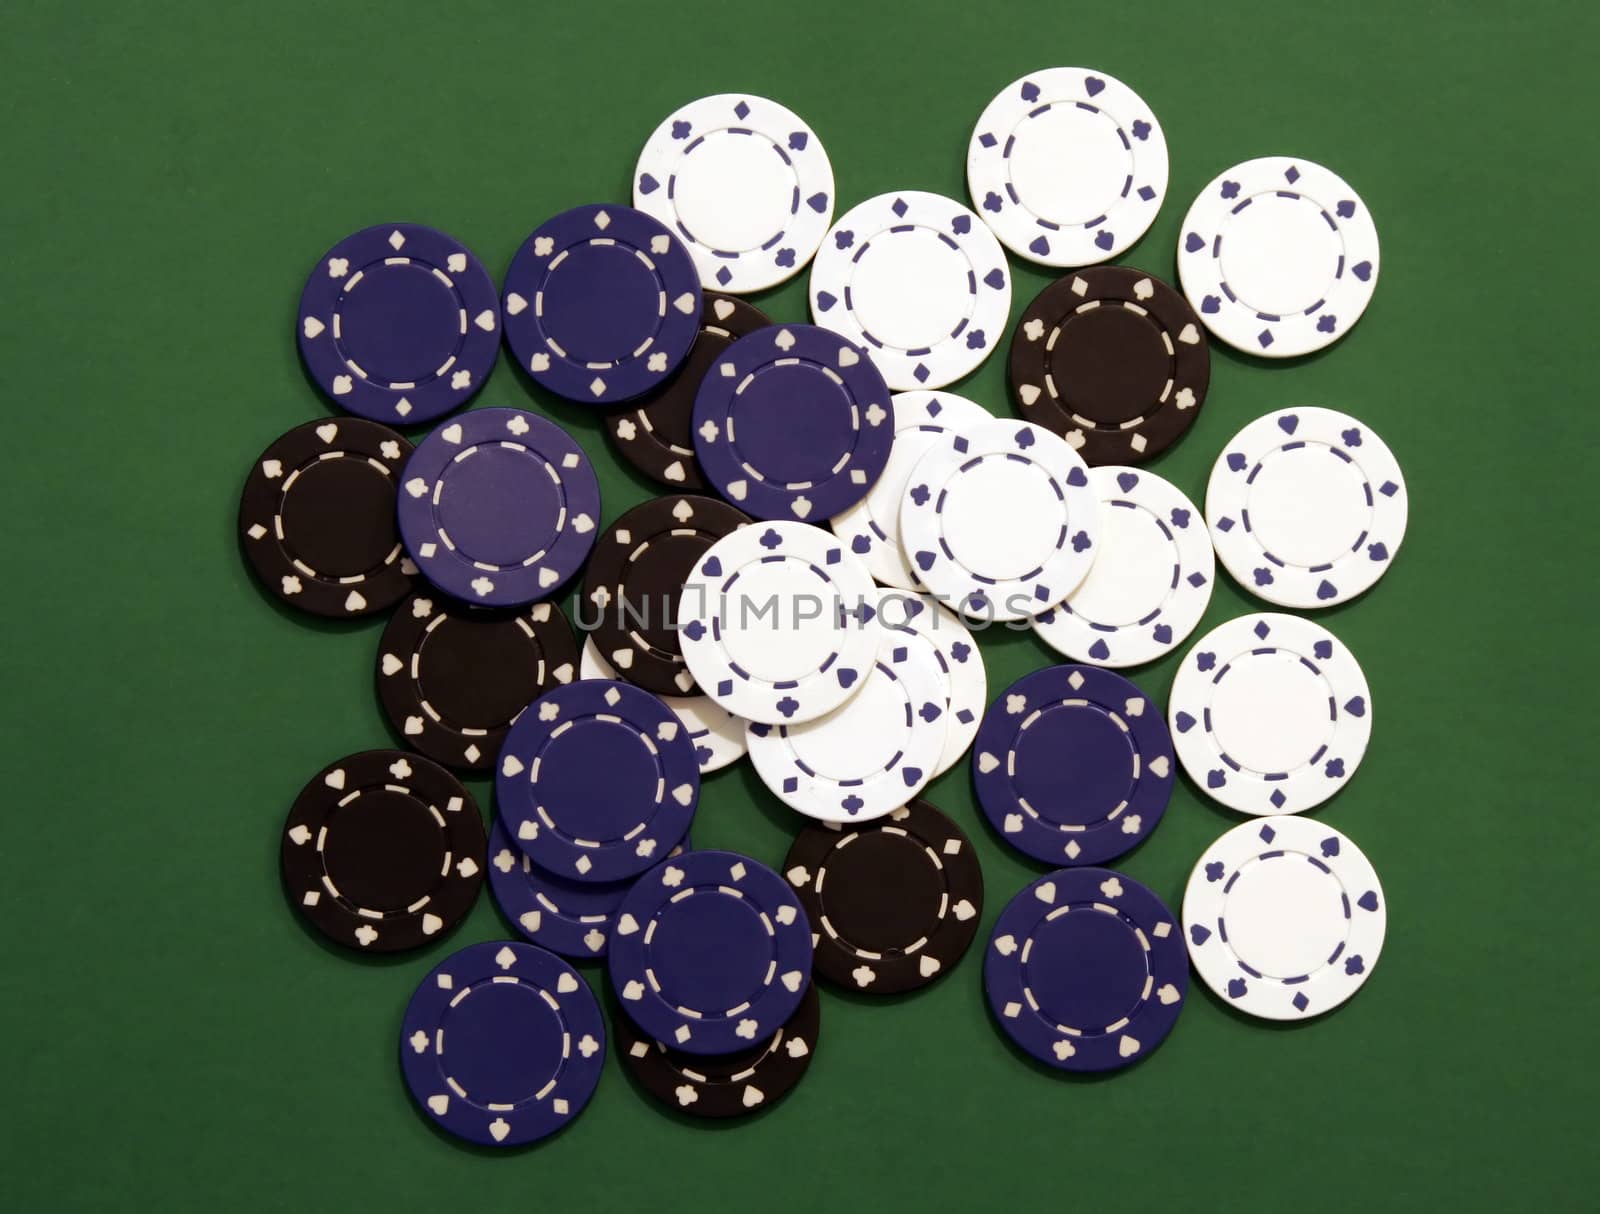 Casino Chips by thorsten